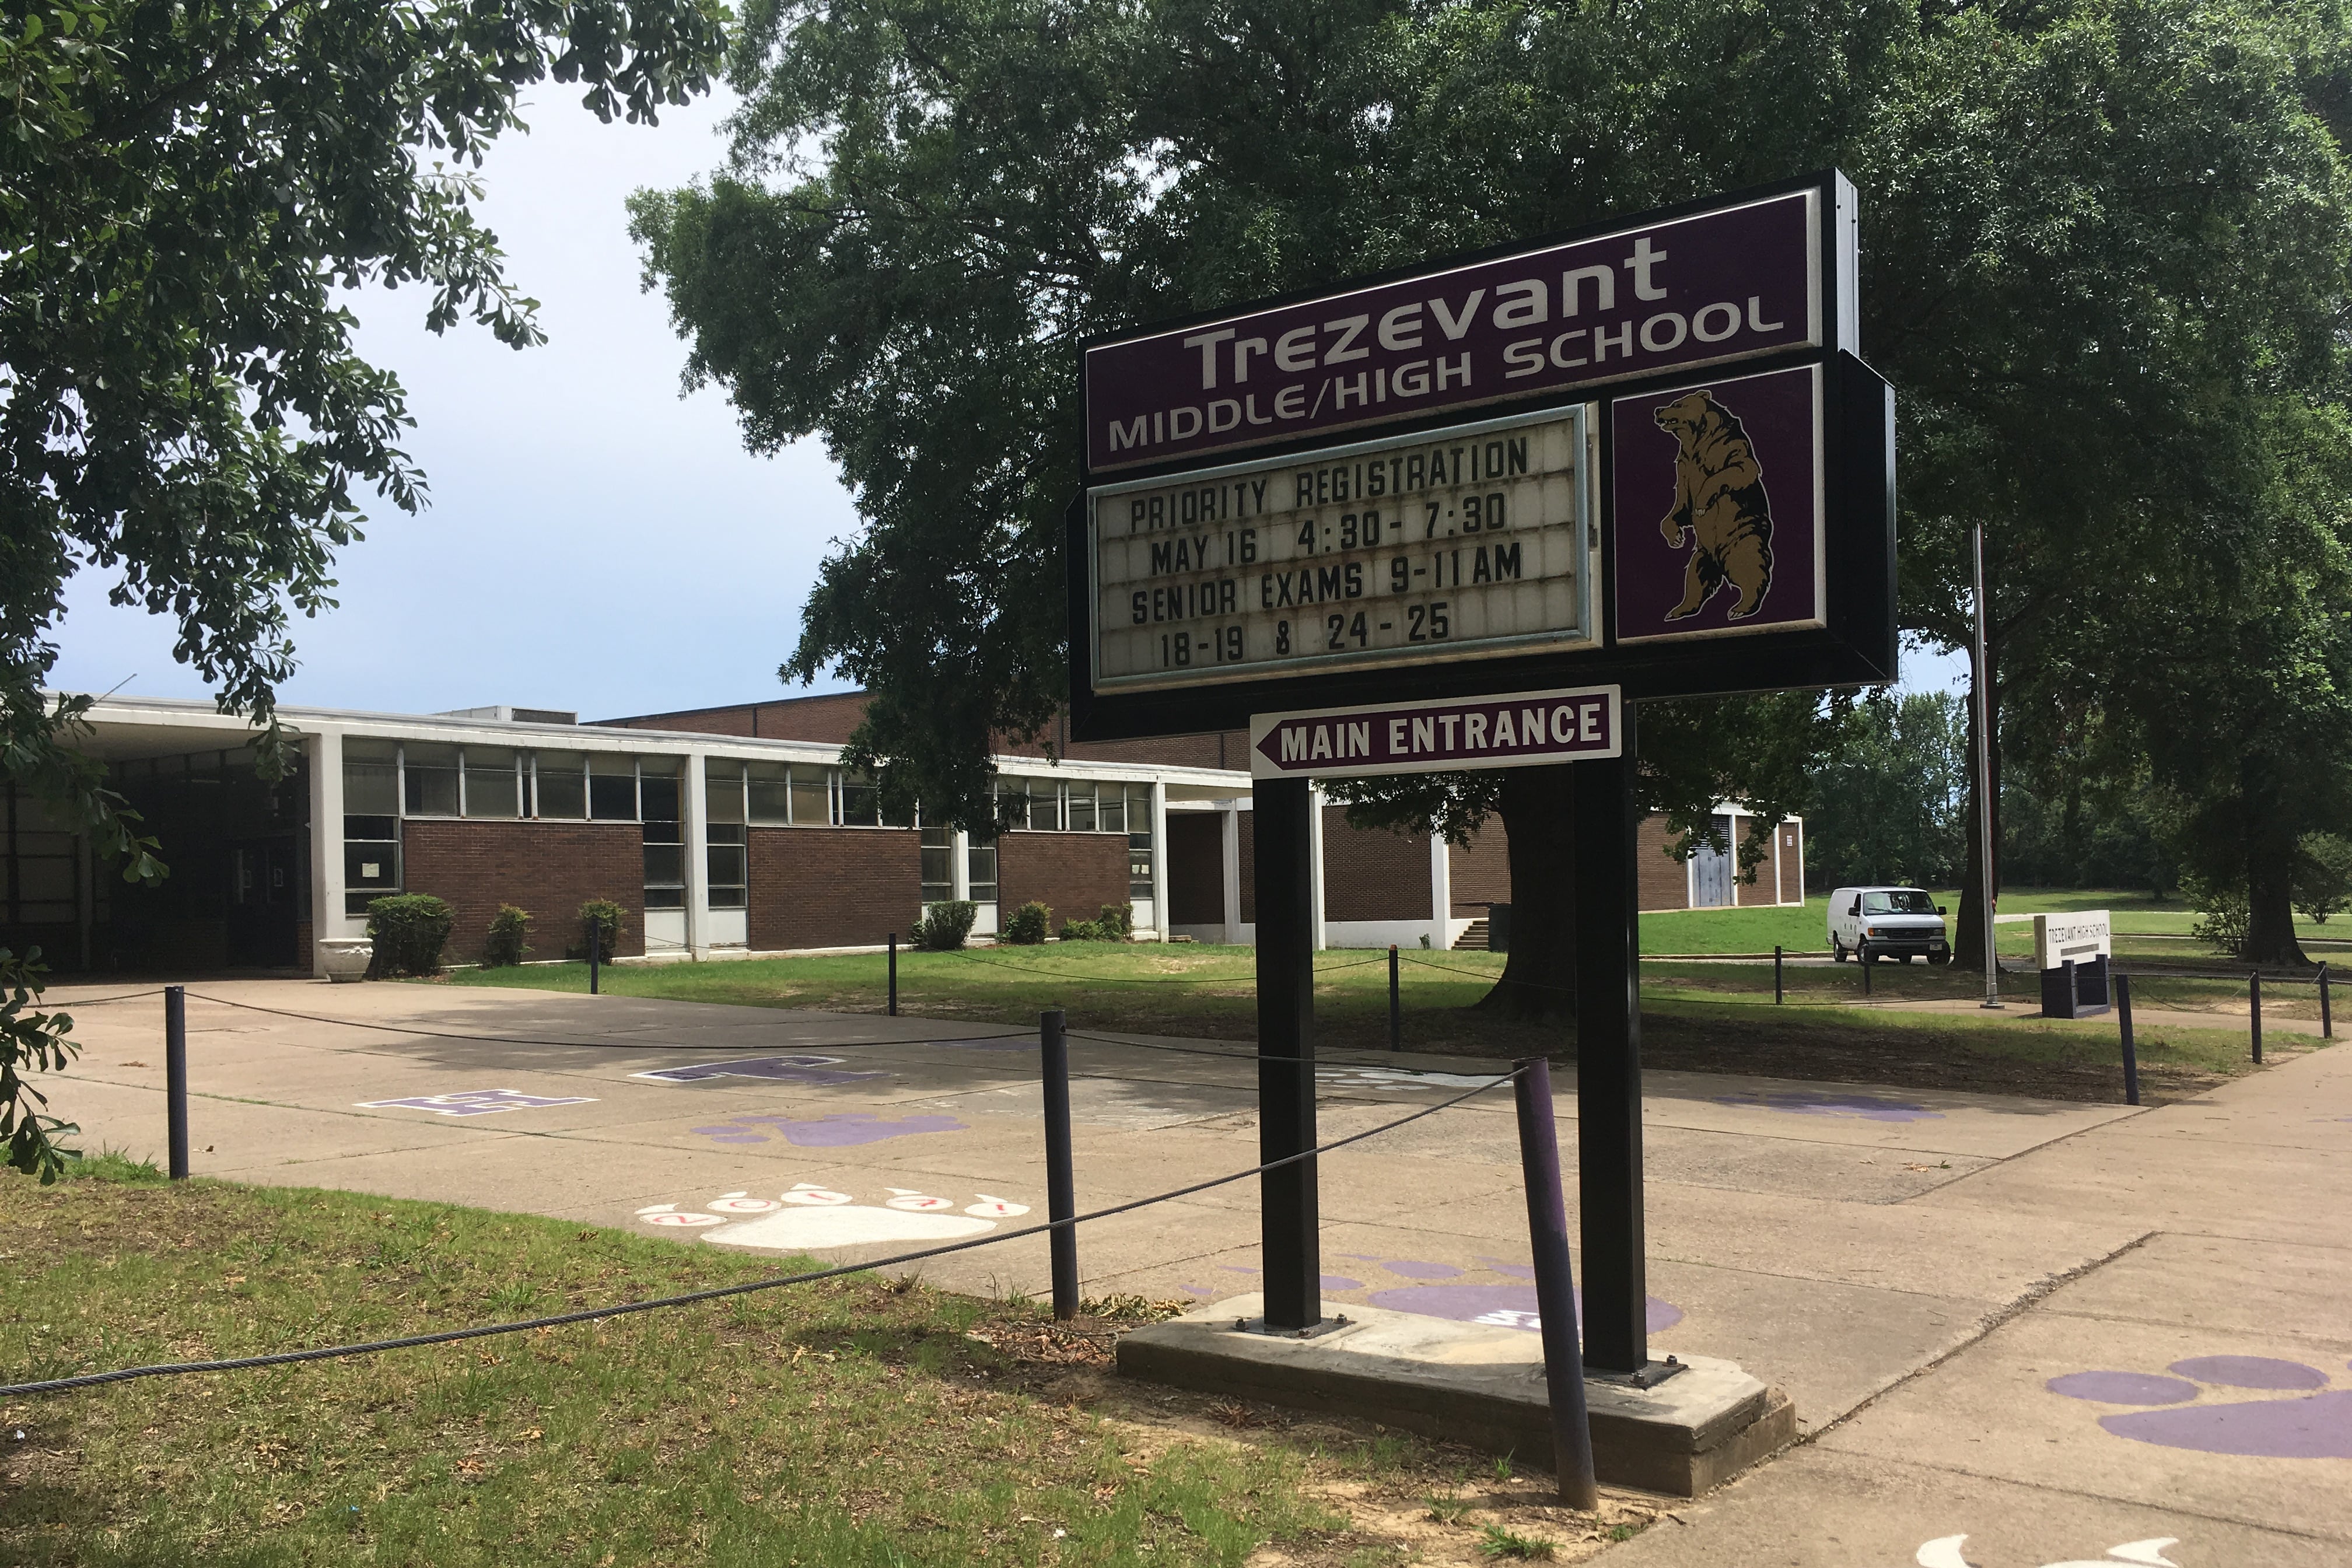 An exterior of a school building, identified on a sign as Trezevant High School.